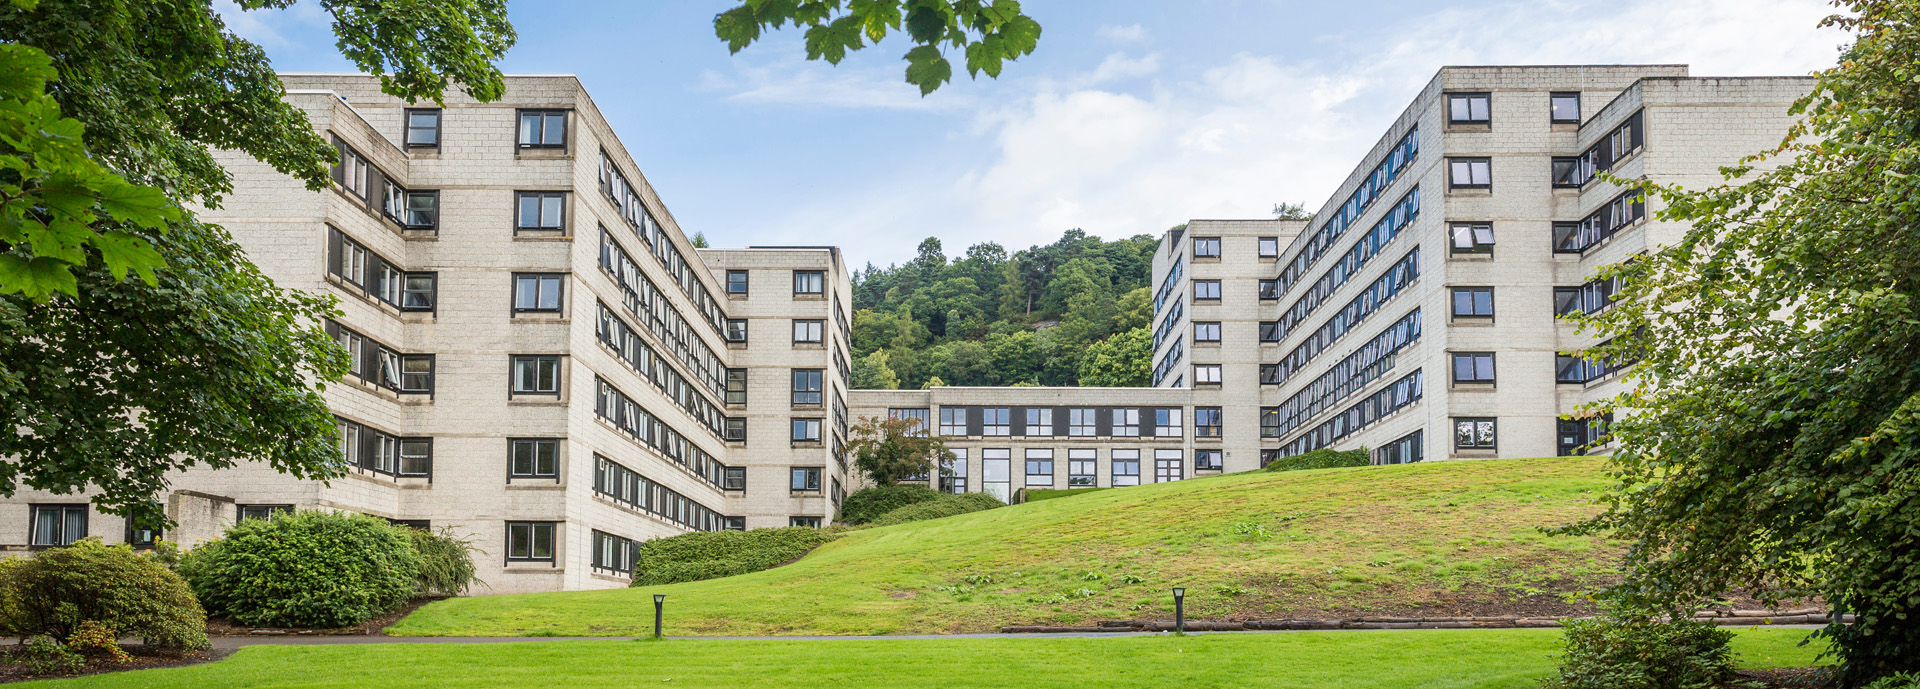 Andrew Stewart Hall accommodation,  University of Stirling